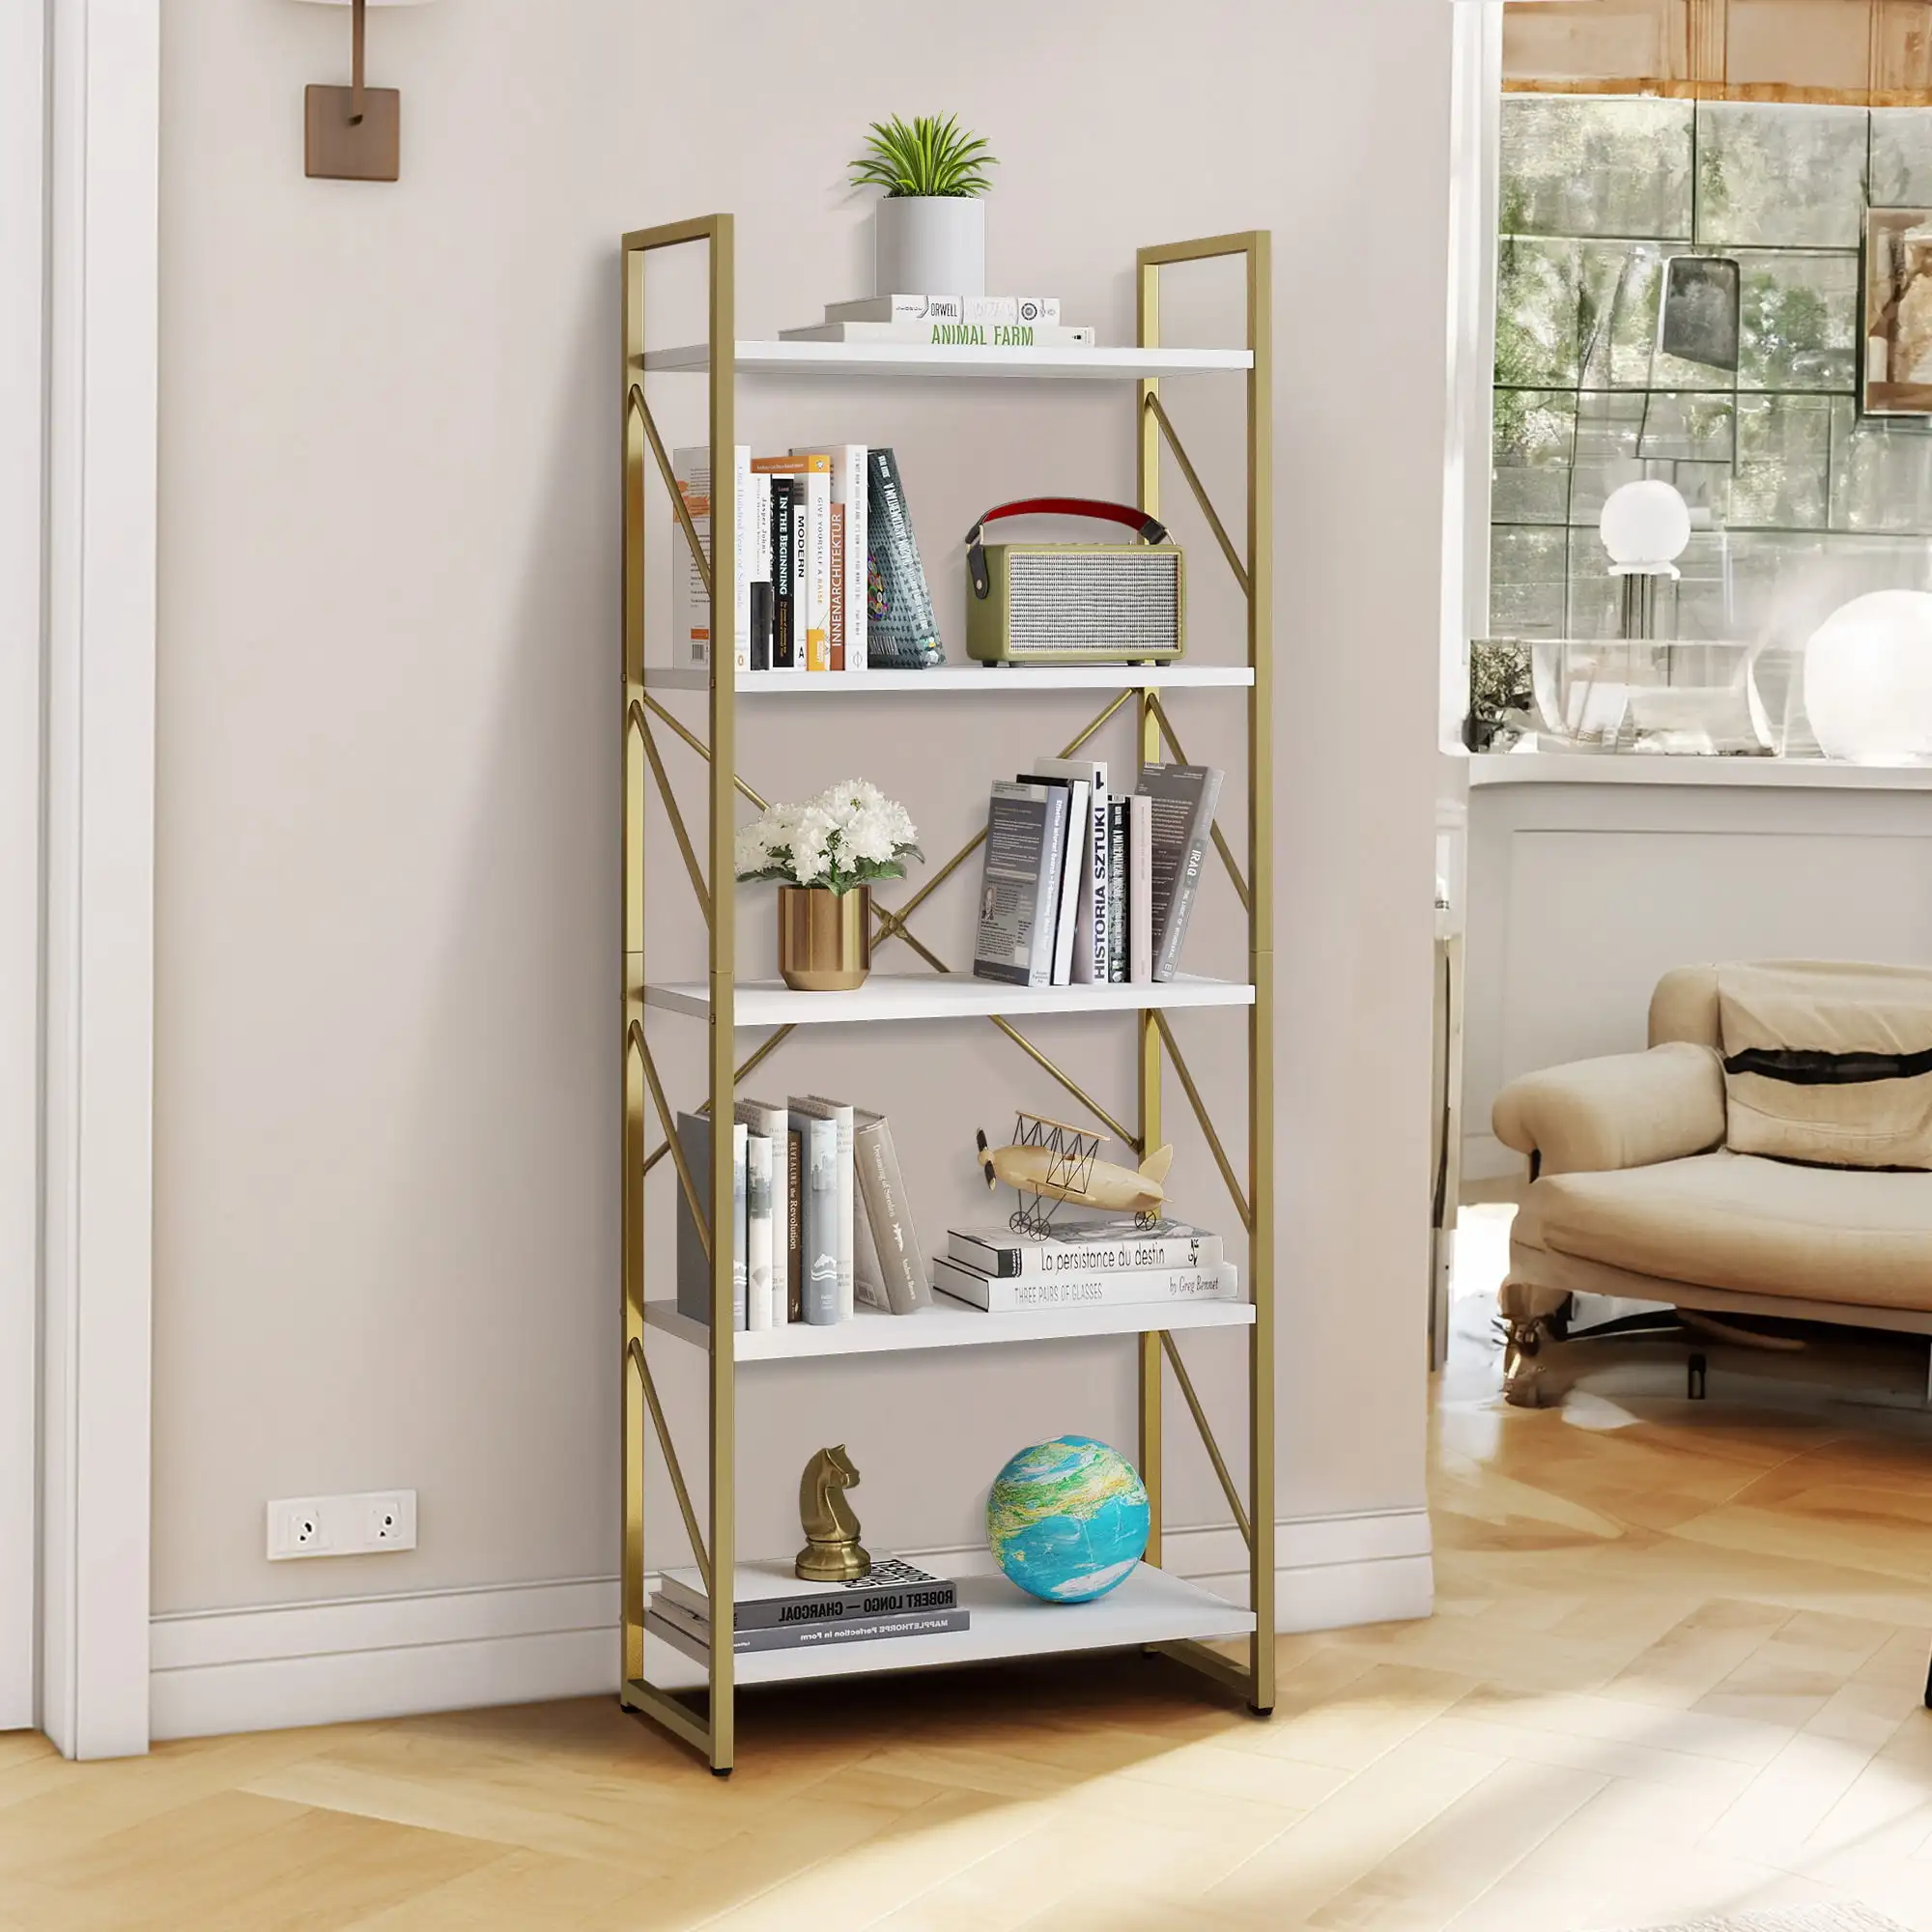 

Dextrus 5-Tier Bookshelf Gold Bookcase Industrial Freestanding Book Shelf Modern Open Display Storage Organizer Book Shelves